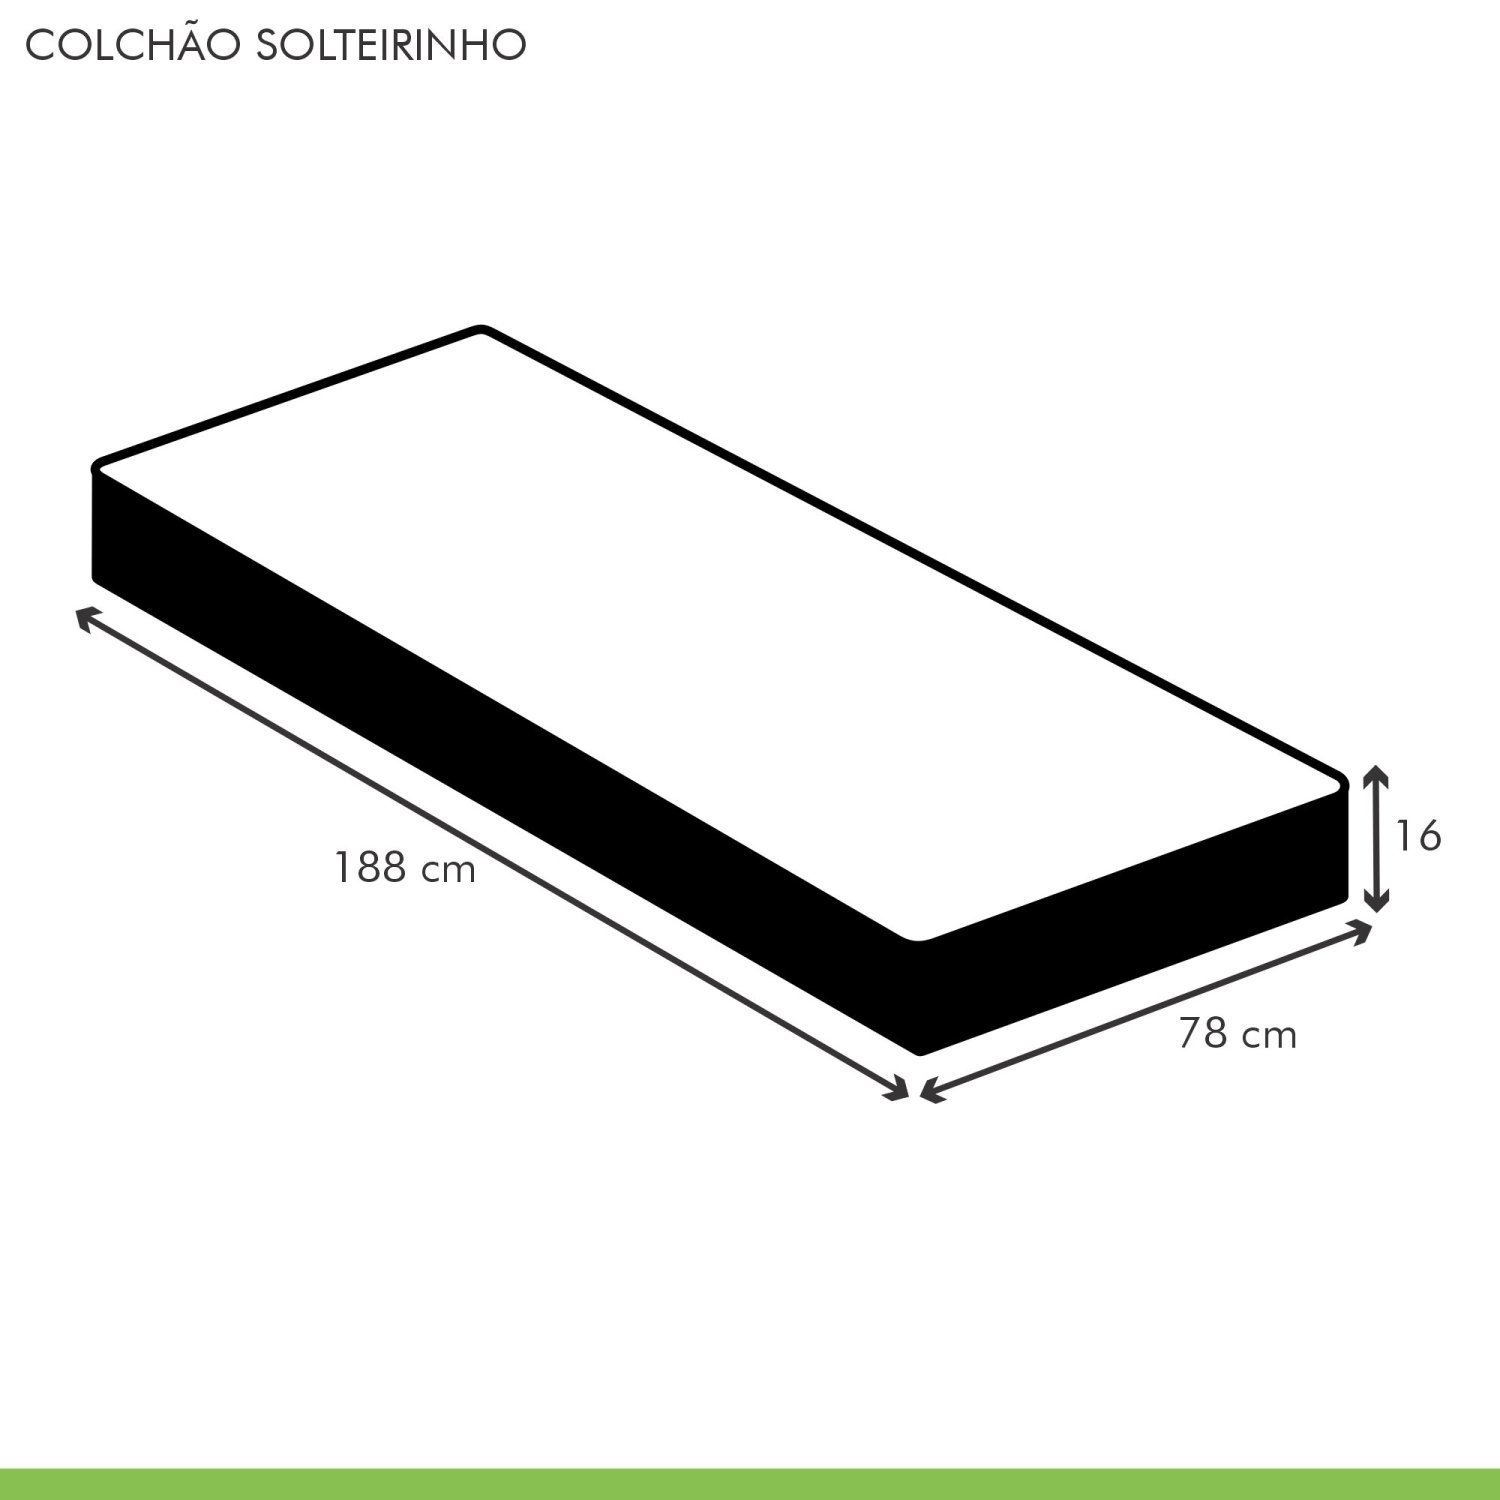 Colchão Solteiro Unique D33 Plus Duoface 16x78x188cm  - 6